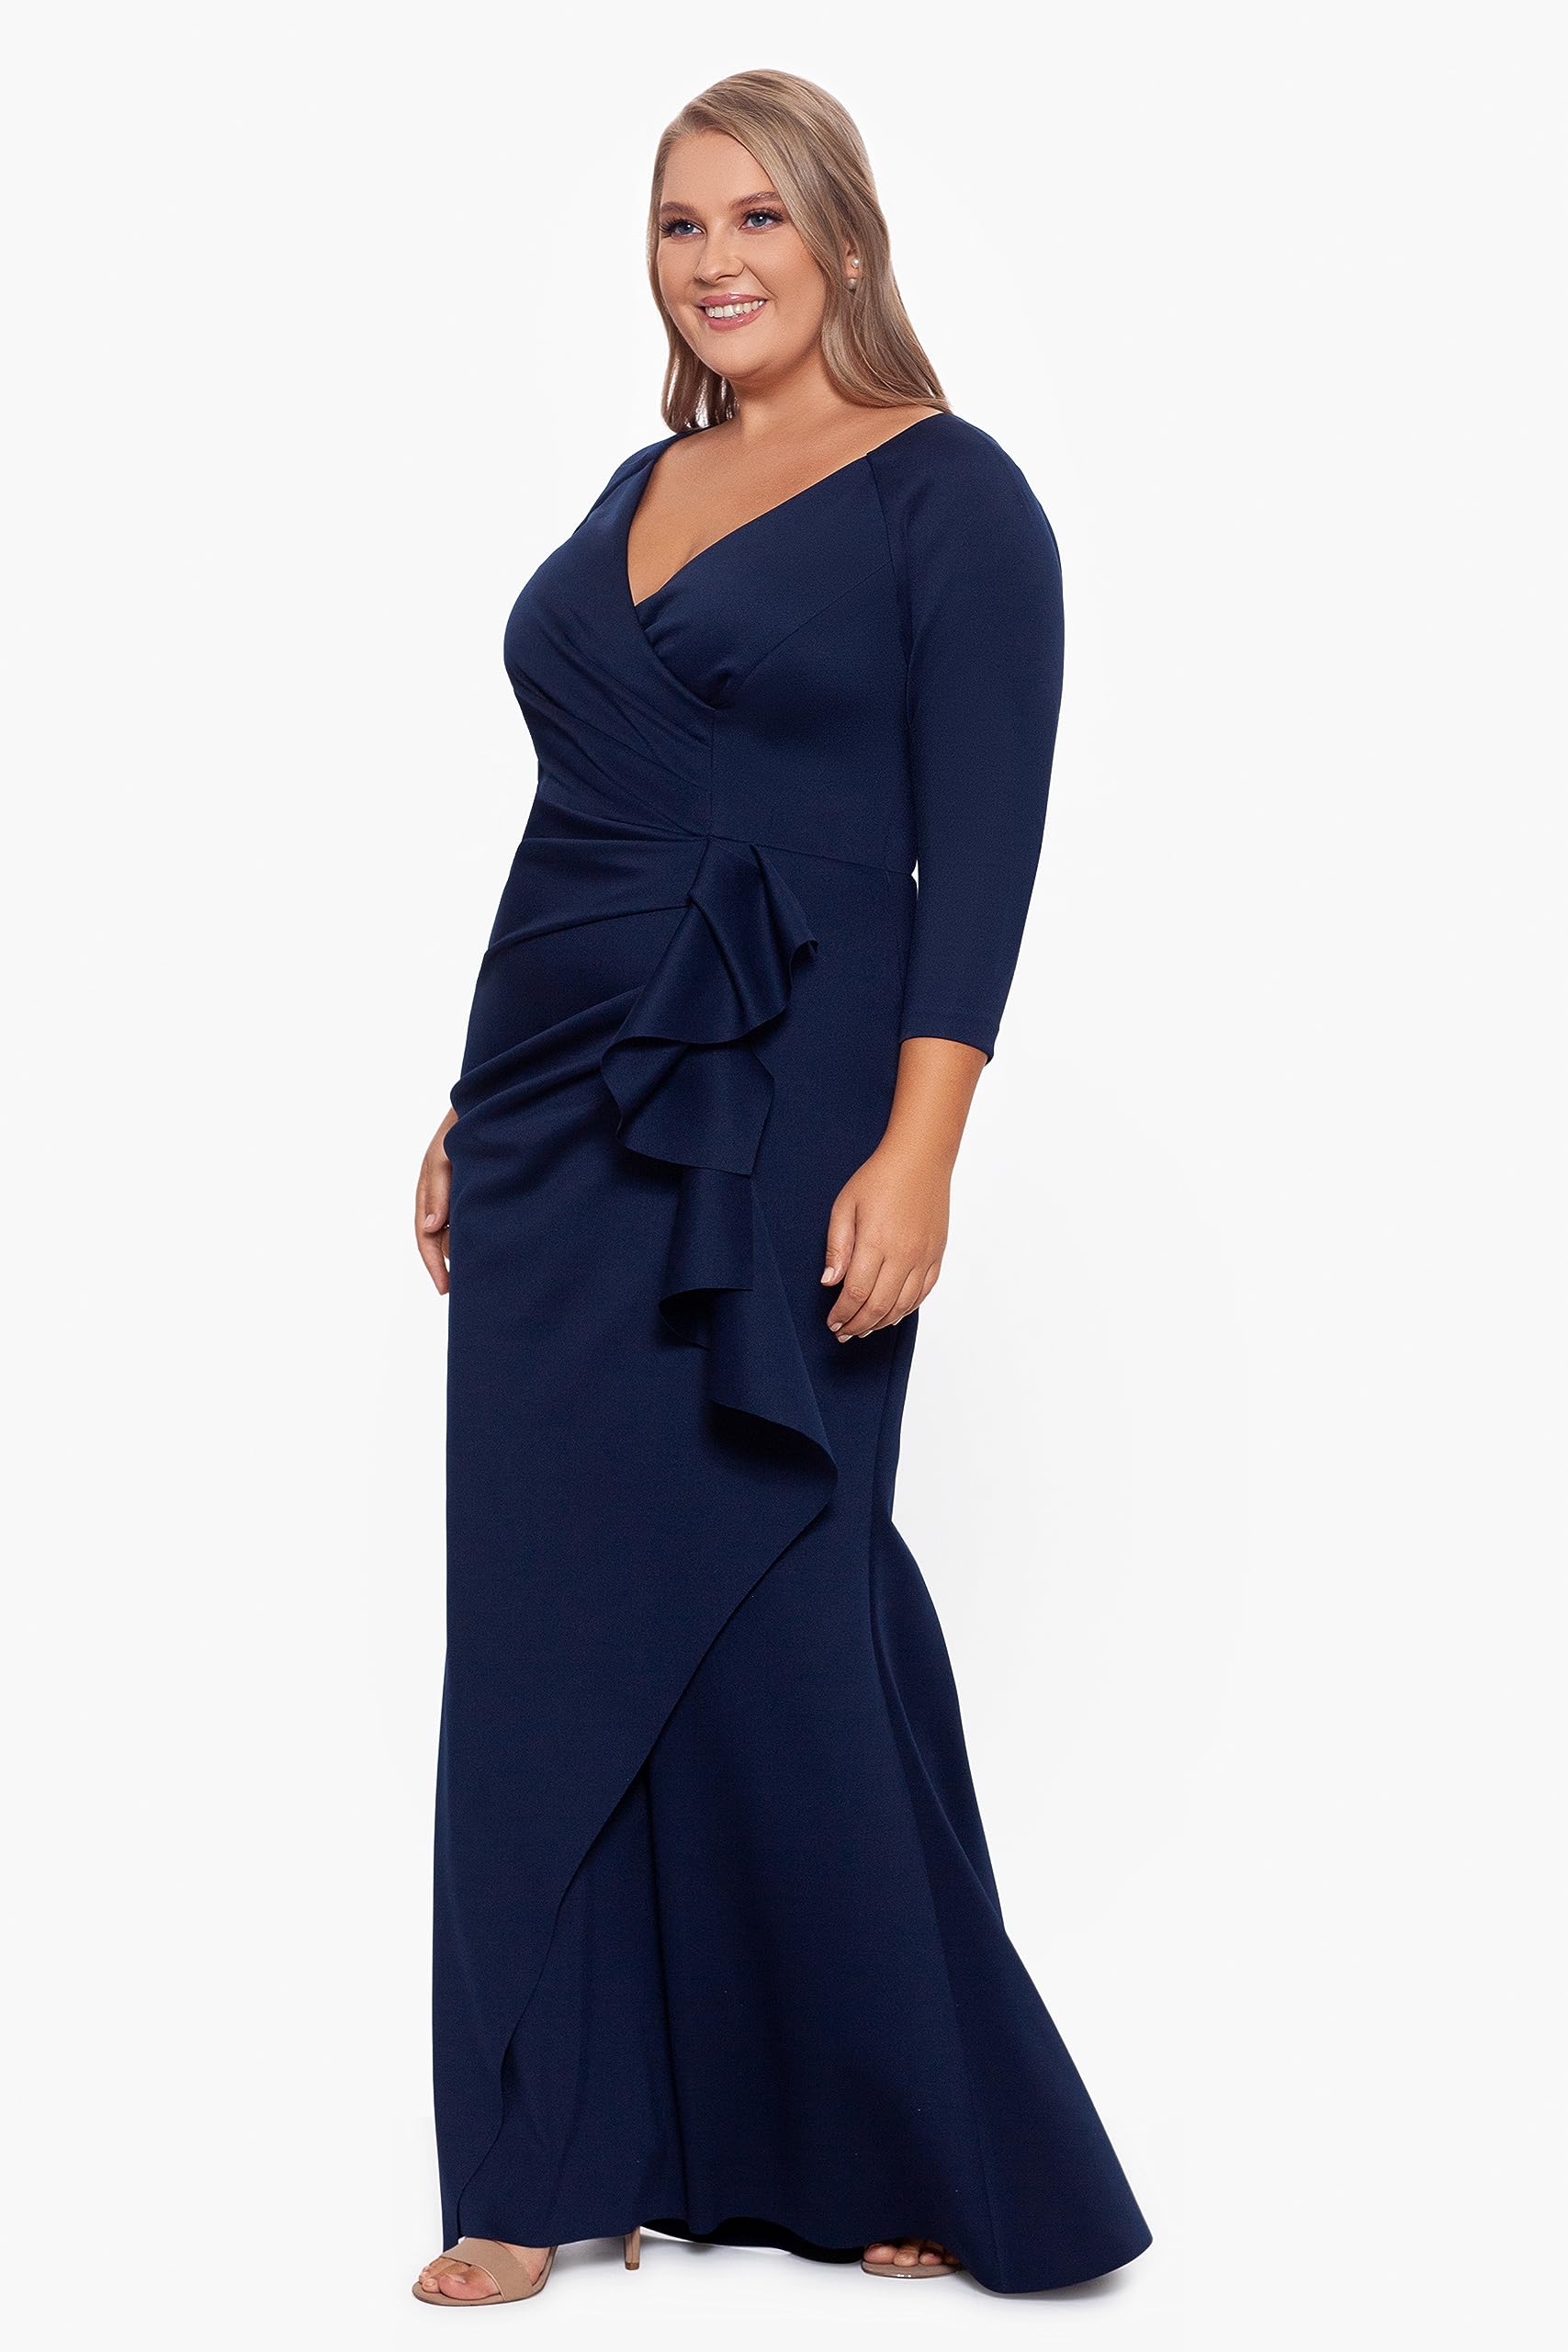 Xscape Women's Plus Size Long 3/4 Sleeve V-Neck Side Ruched Dress